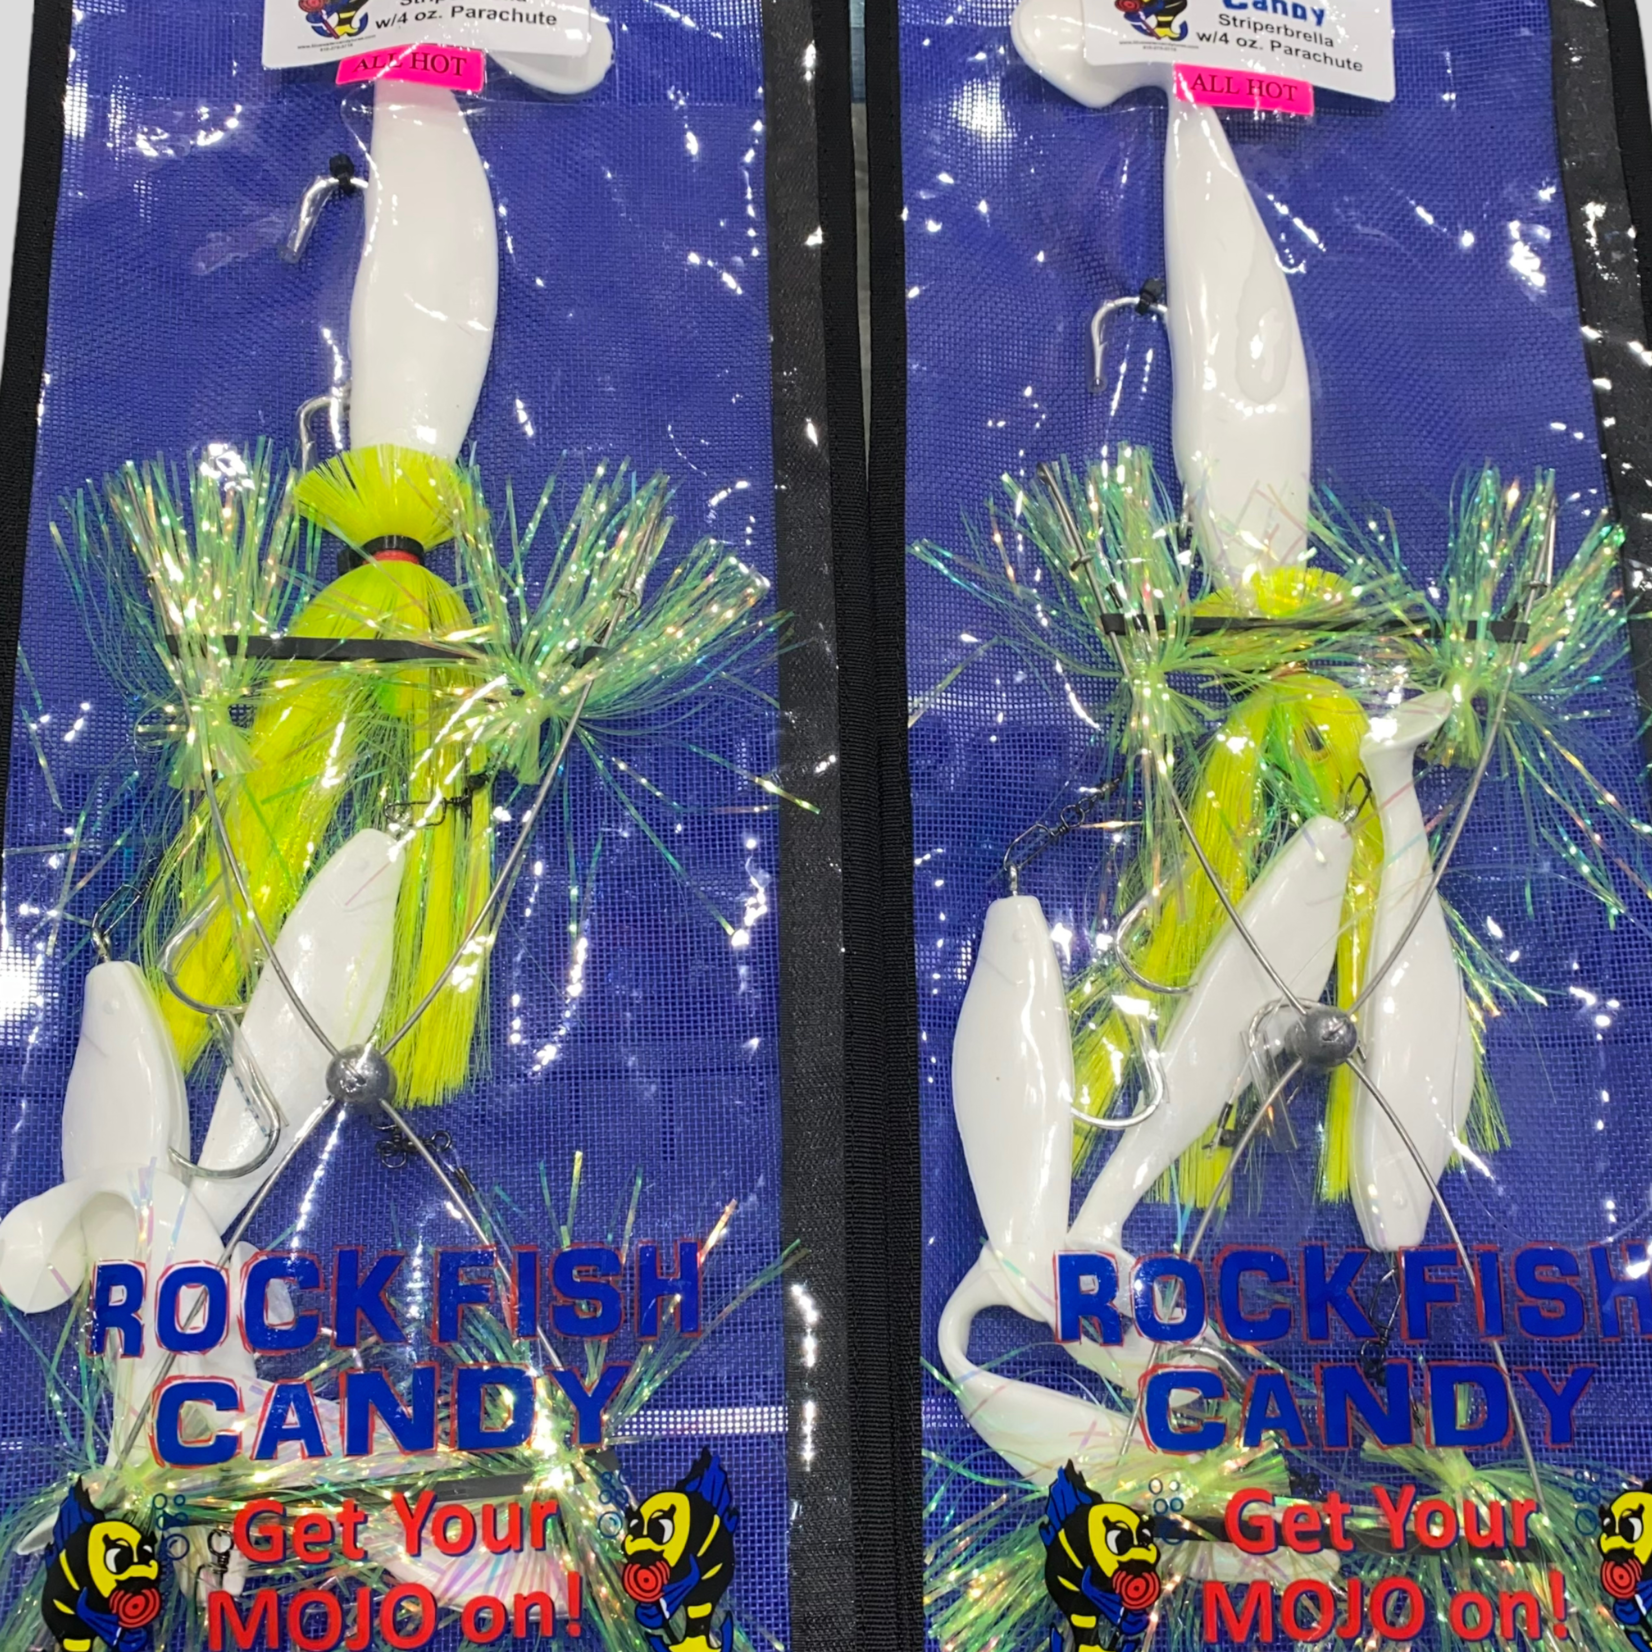 BWC Rock Fish Candy Striperbrella